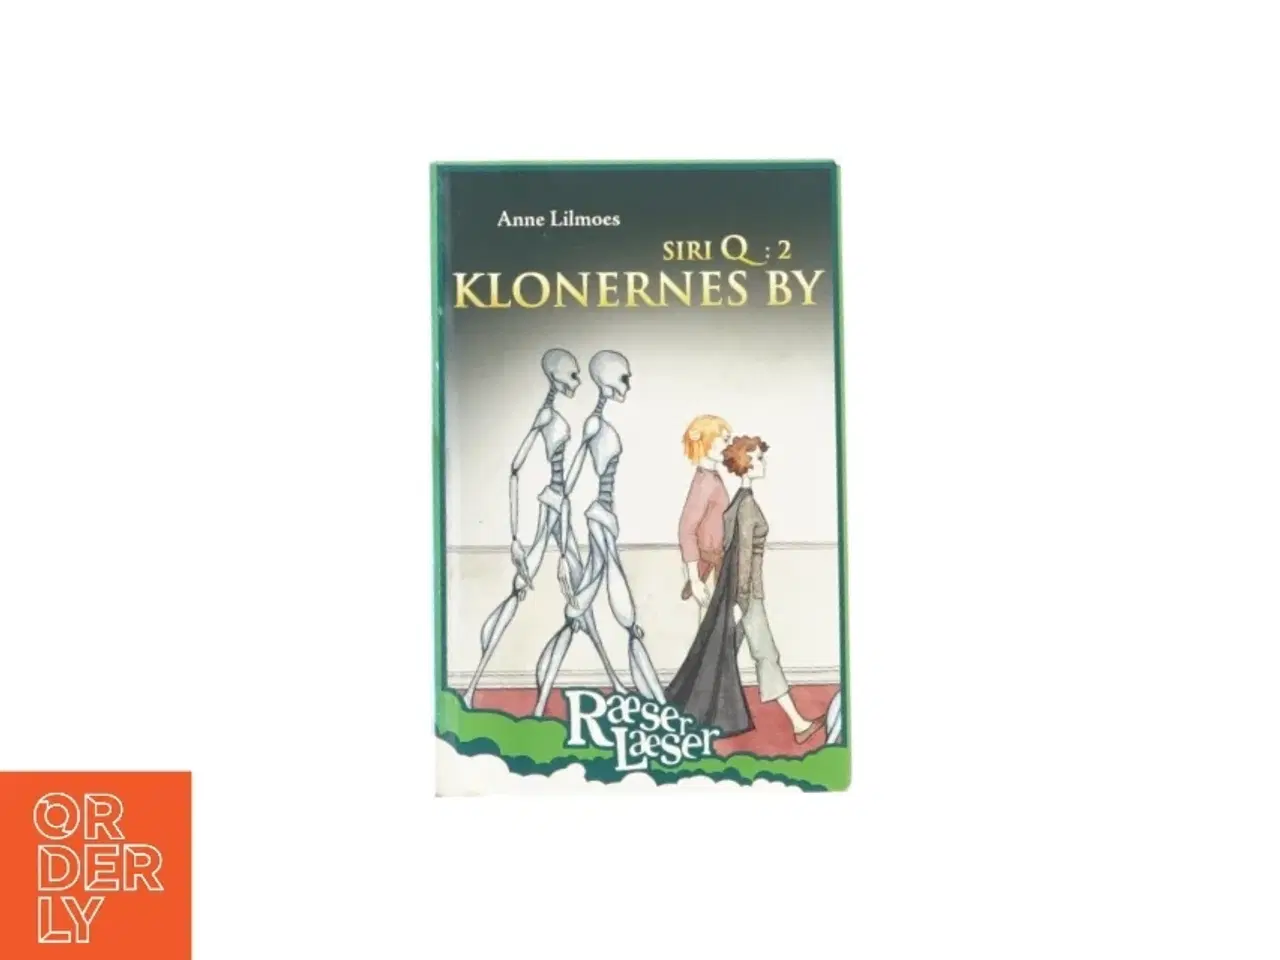 Billede 1 - Siri Q: 2 Klonernes by af Anne Lilmoes (bog)